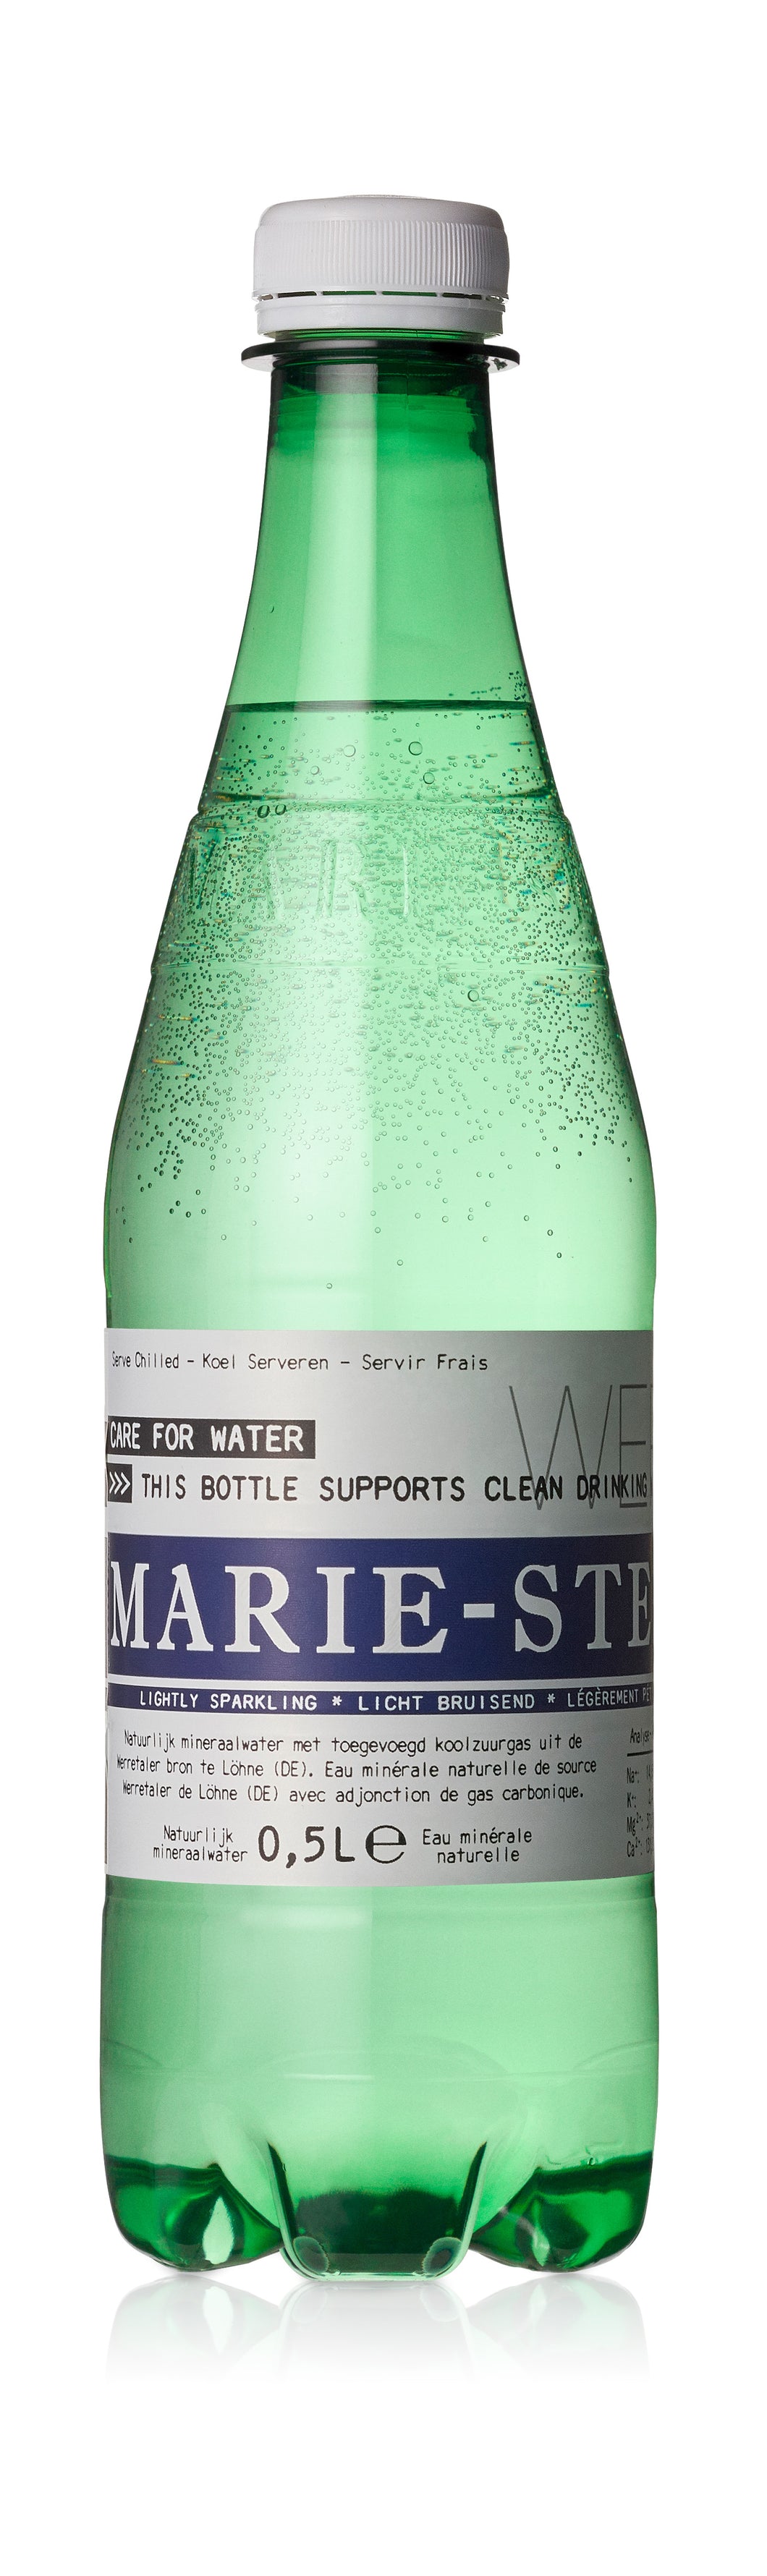 KRAT MARIE-STELLA-MARIS Sparkling Water 24 x 50 cl PET